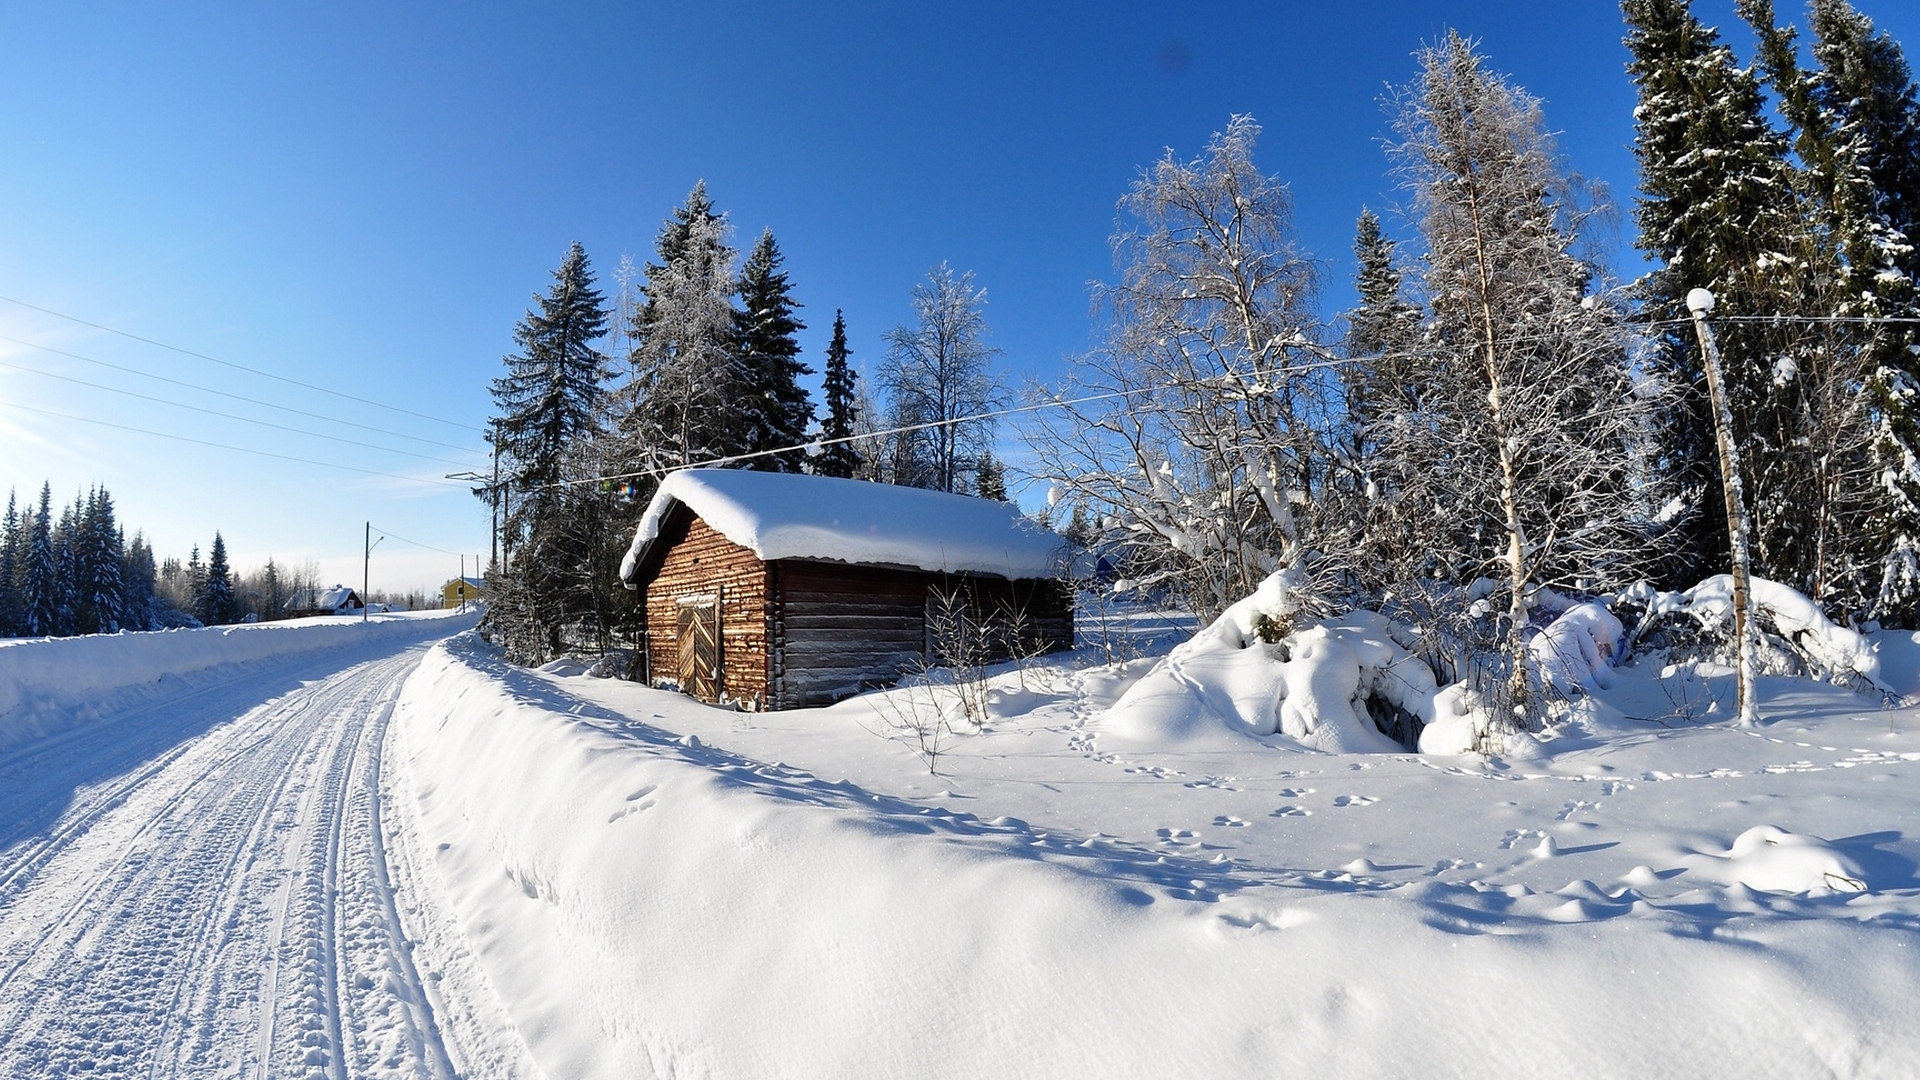 snowy cottage screensaver freeze